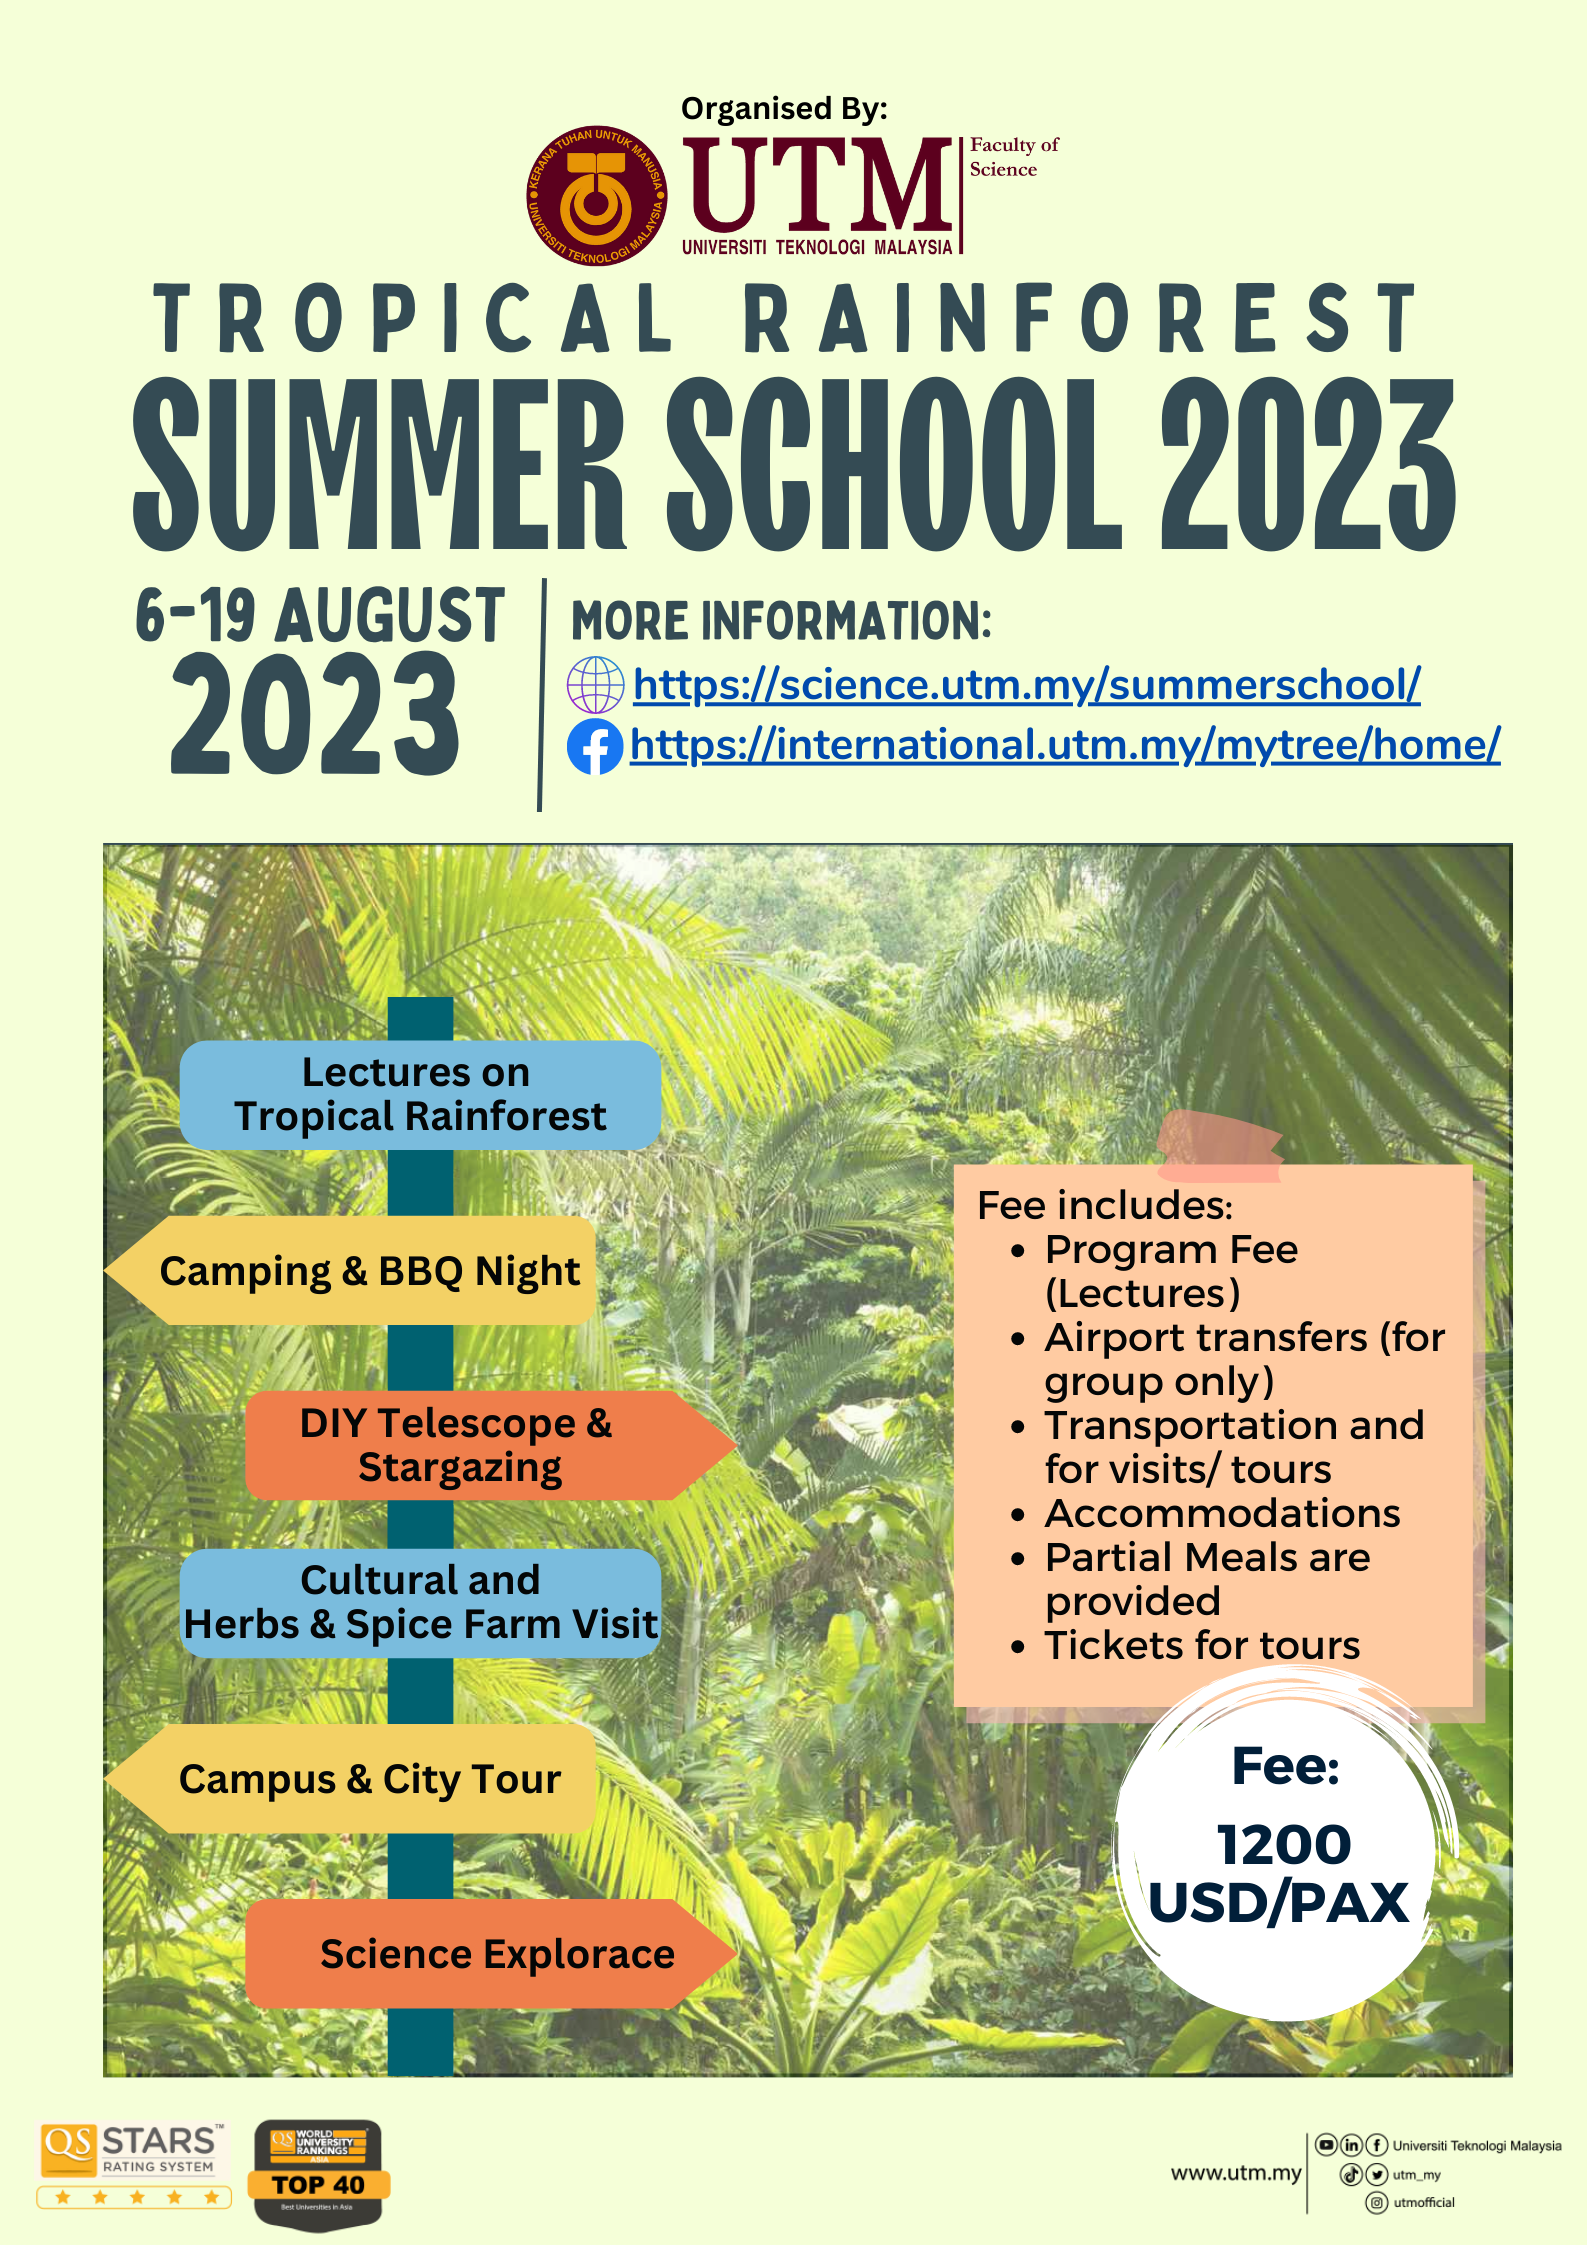 UTM TROPICAL RAINFOREST SUMMER SCHOOL 2023